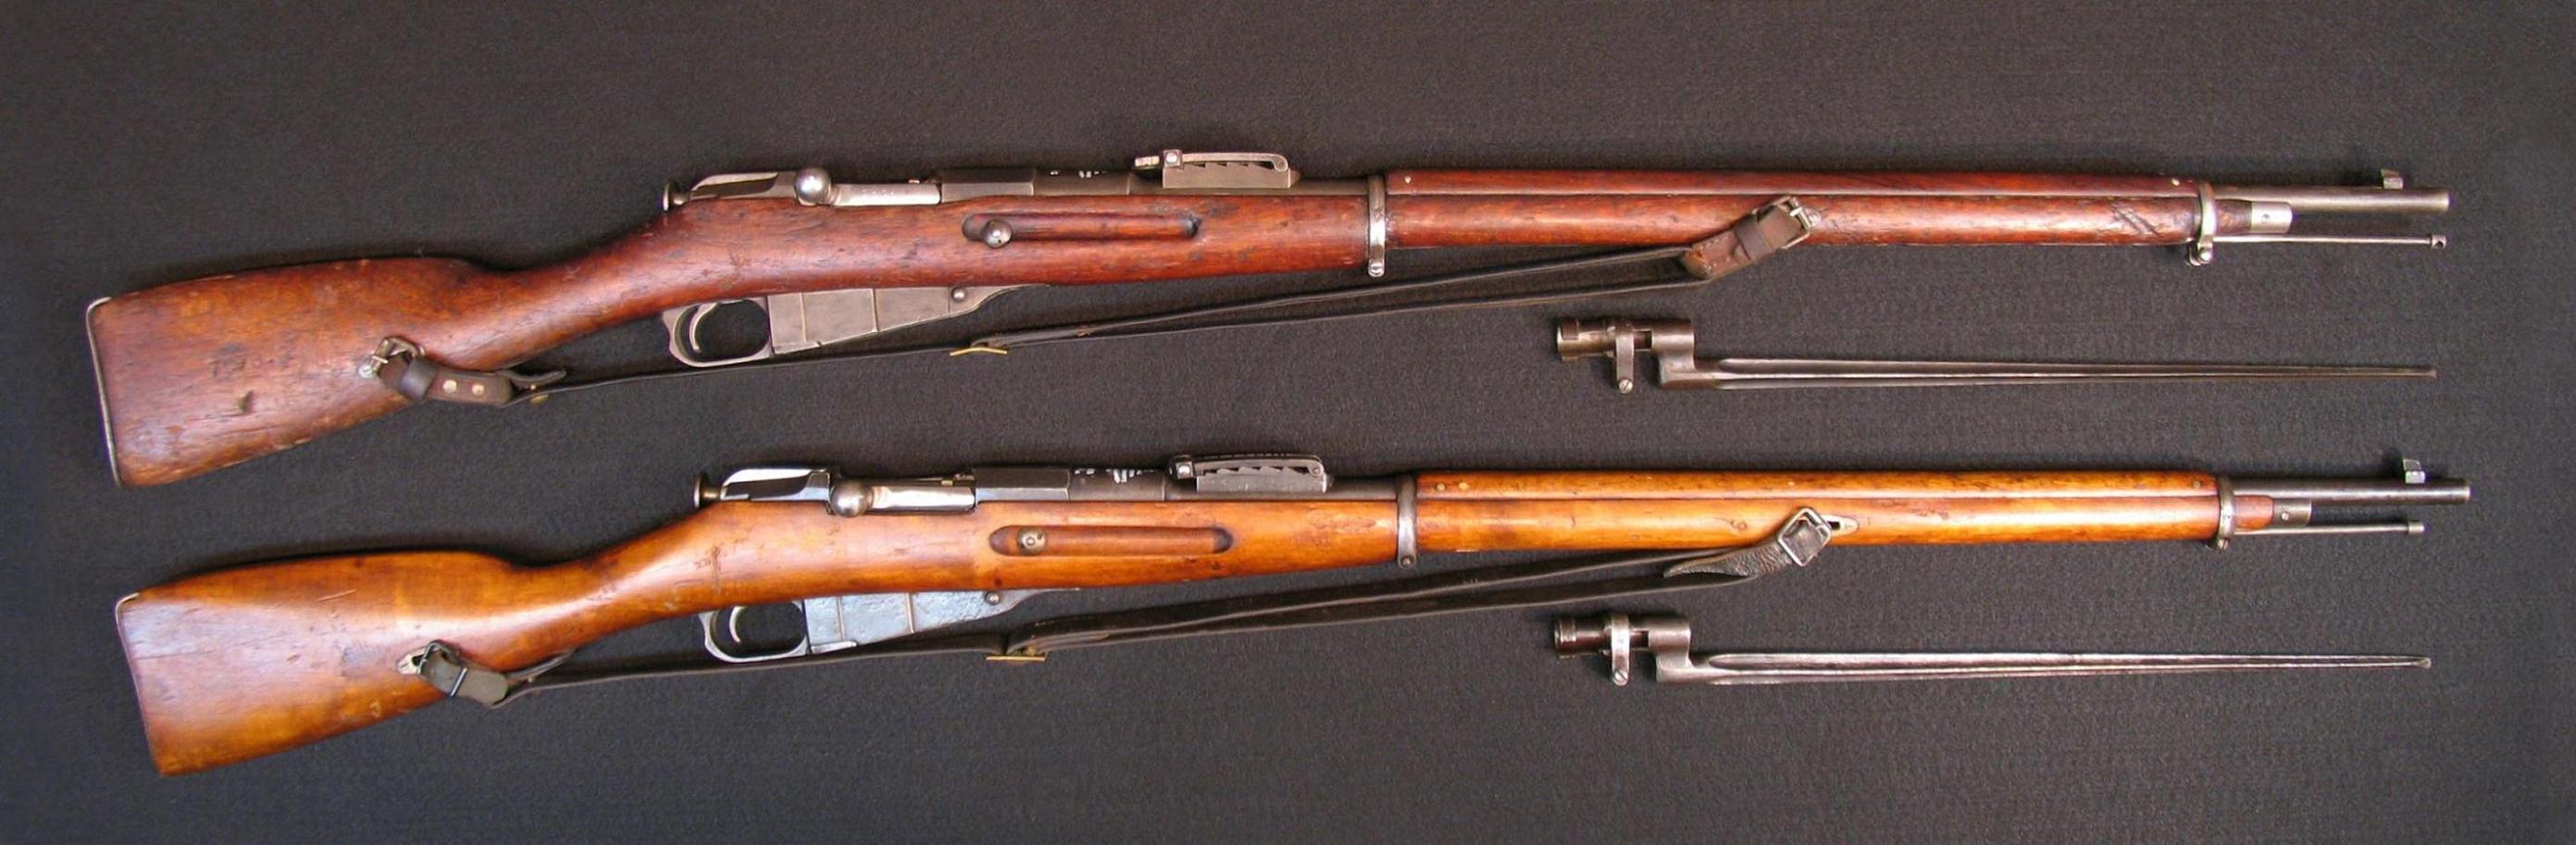 Serbian Marked M91 Three-Line Rifles R-1